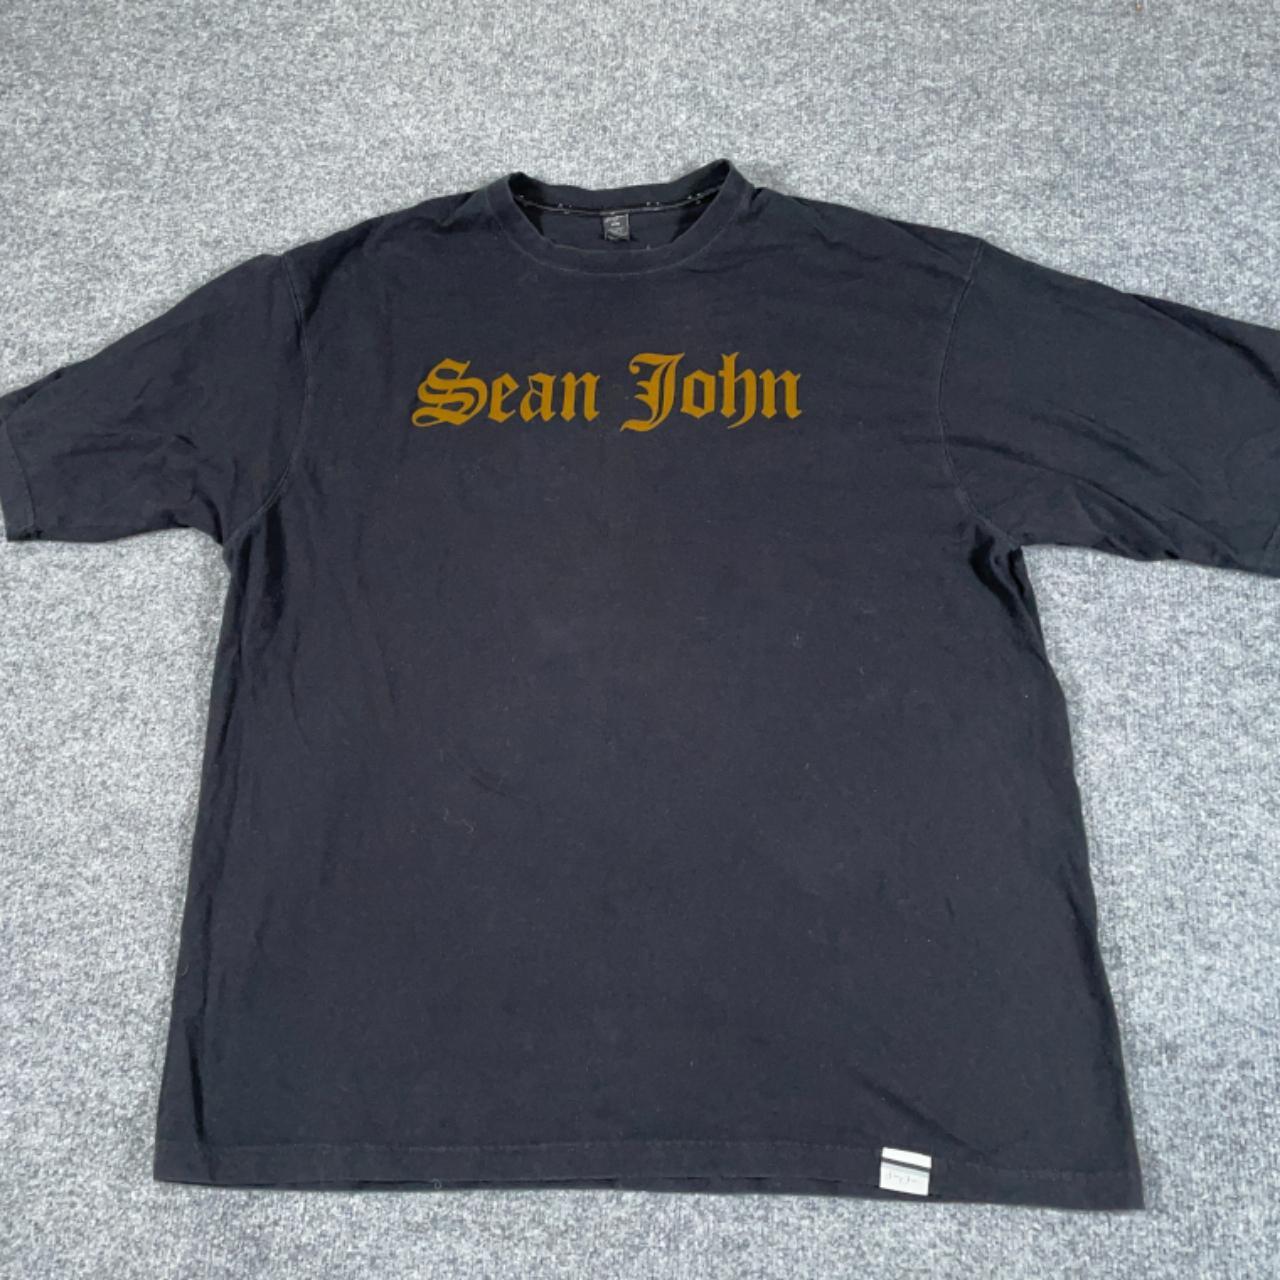 Sean John Men's Black and Gold T-shirt